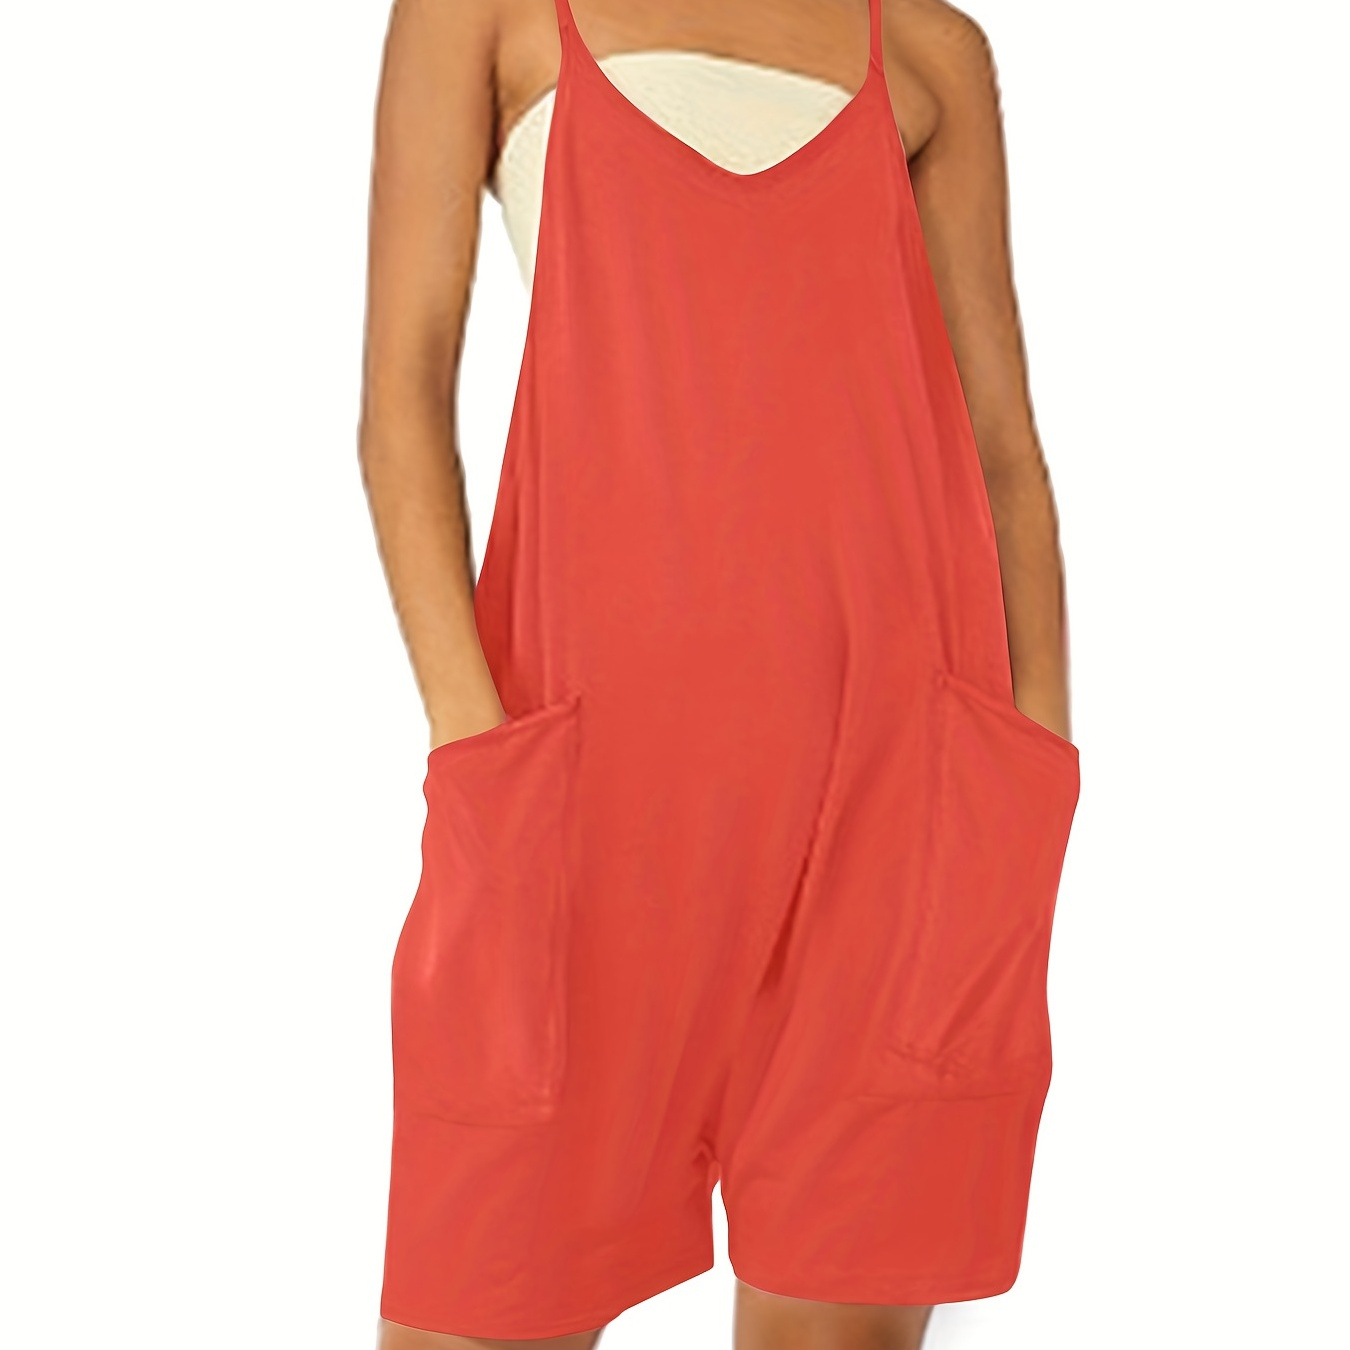 

V Neck Sleeveless Romper, Solid Casual Pocket Jumpsuit For Summer & Spring, Women's Clothing